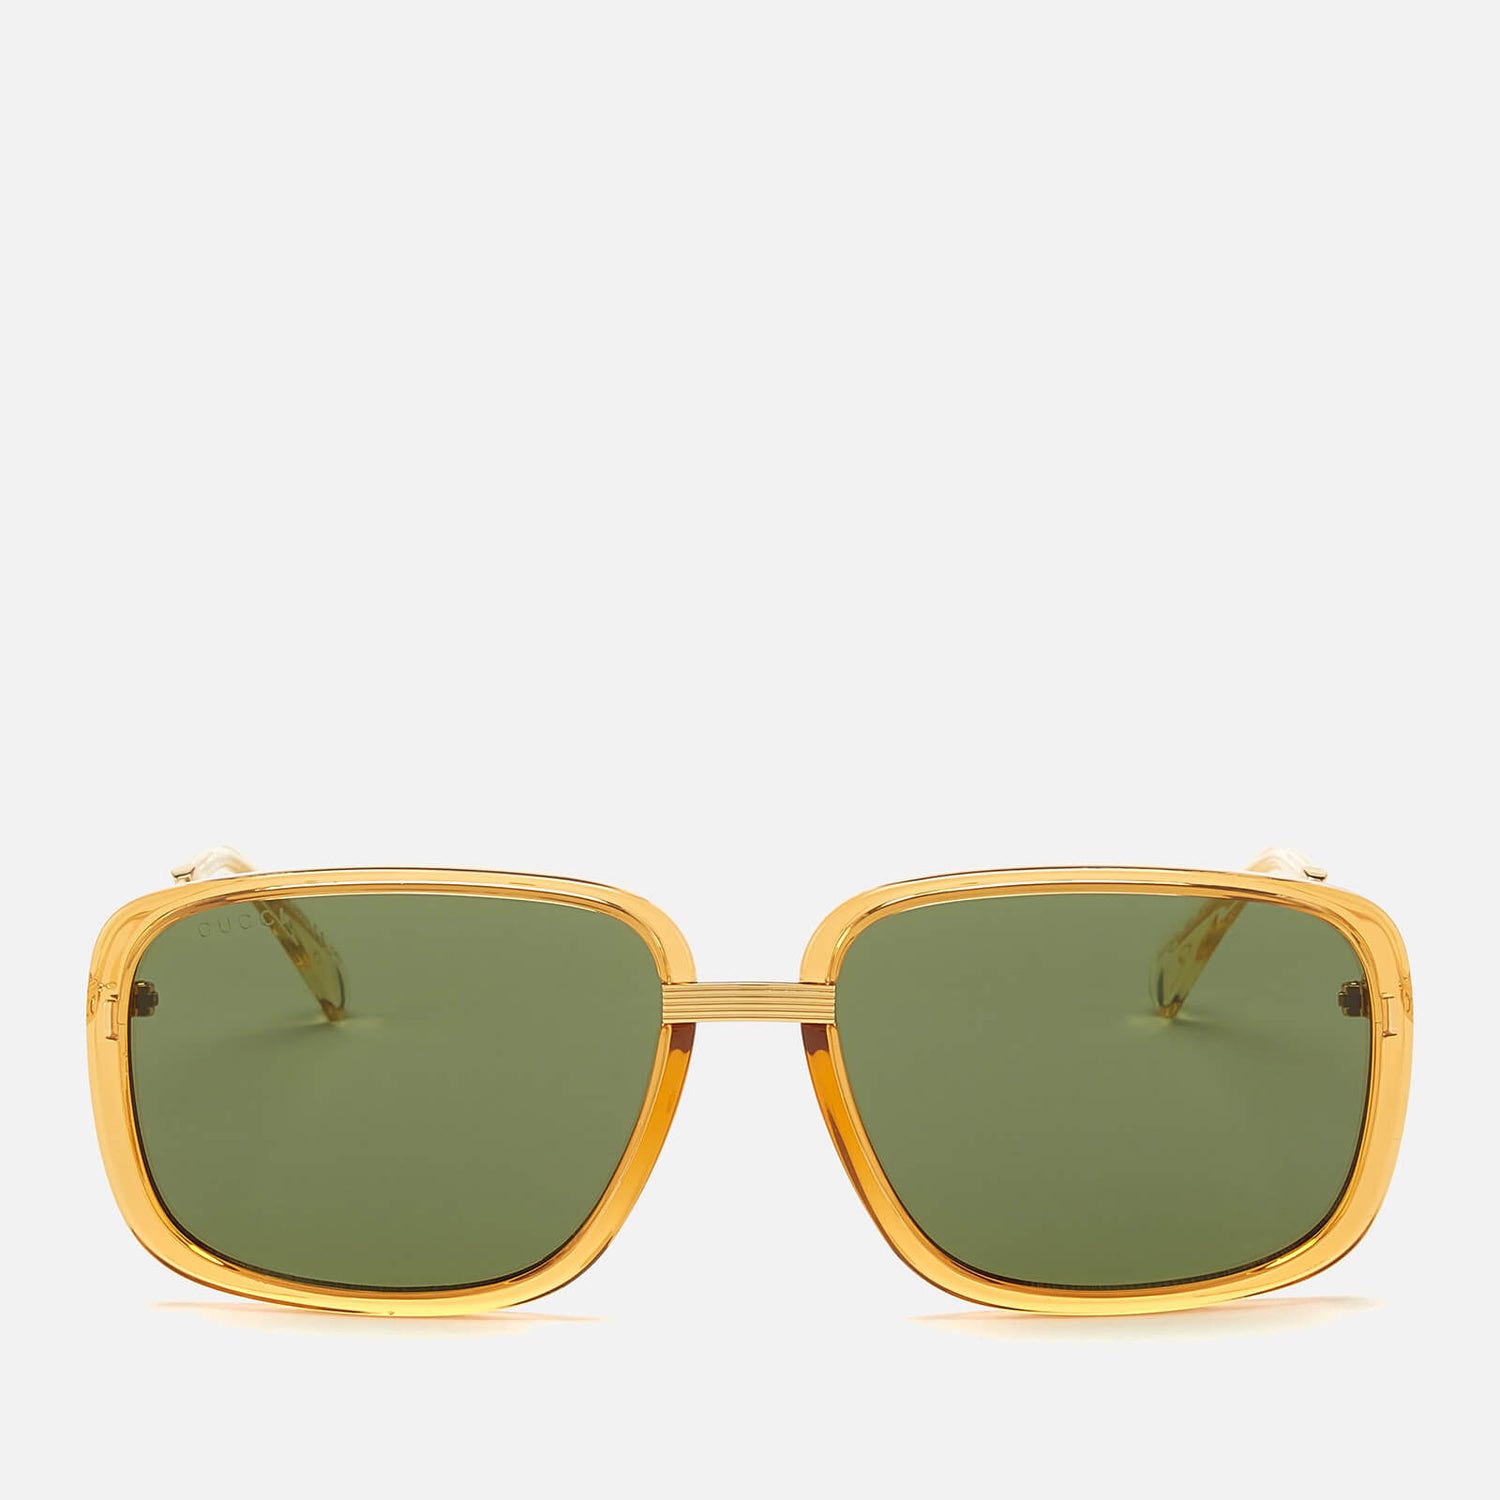 Gucci Men's Metal Frame Sunglasses - Shiny Yellow Gold/Transparent Amber